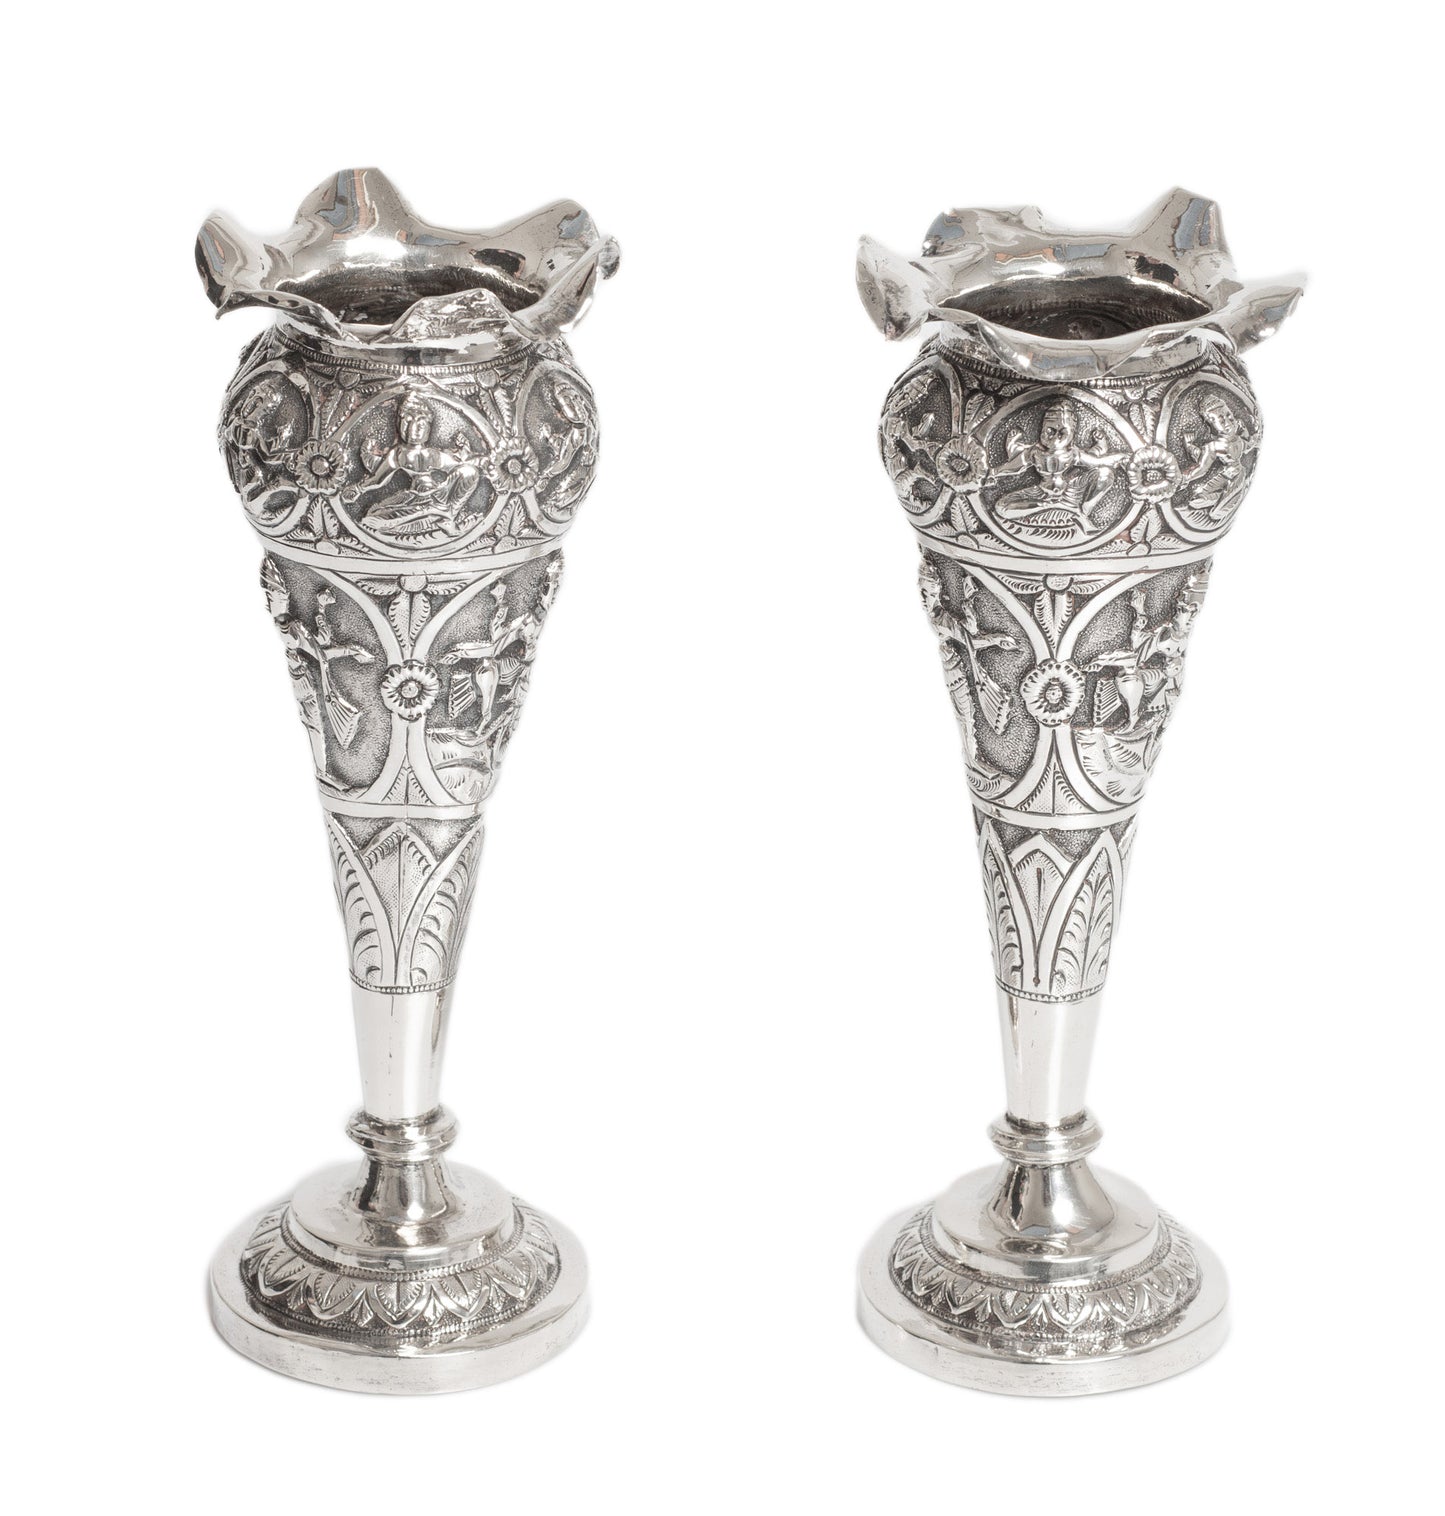 Antique Indian Swami Silver Vases with Hindu Deities - Madras Region c1880 (Code 2763)